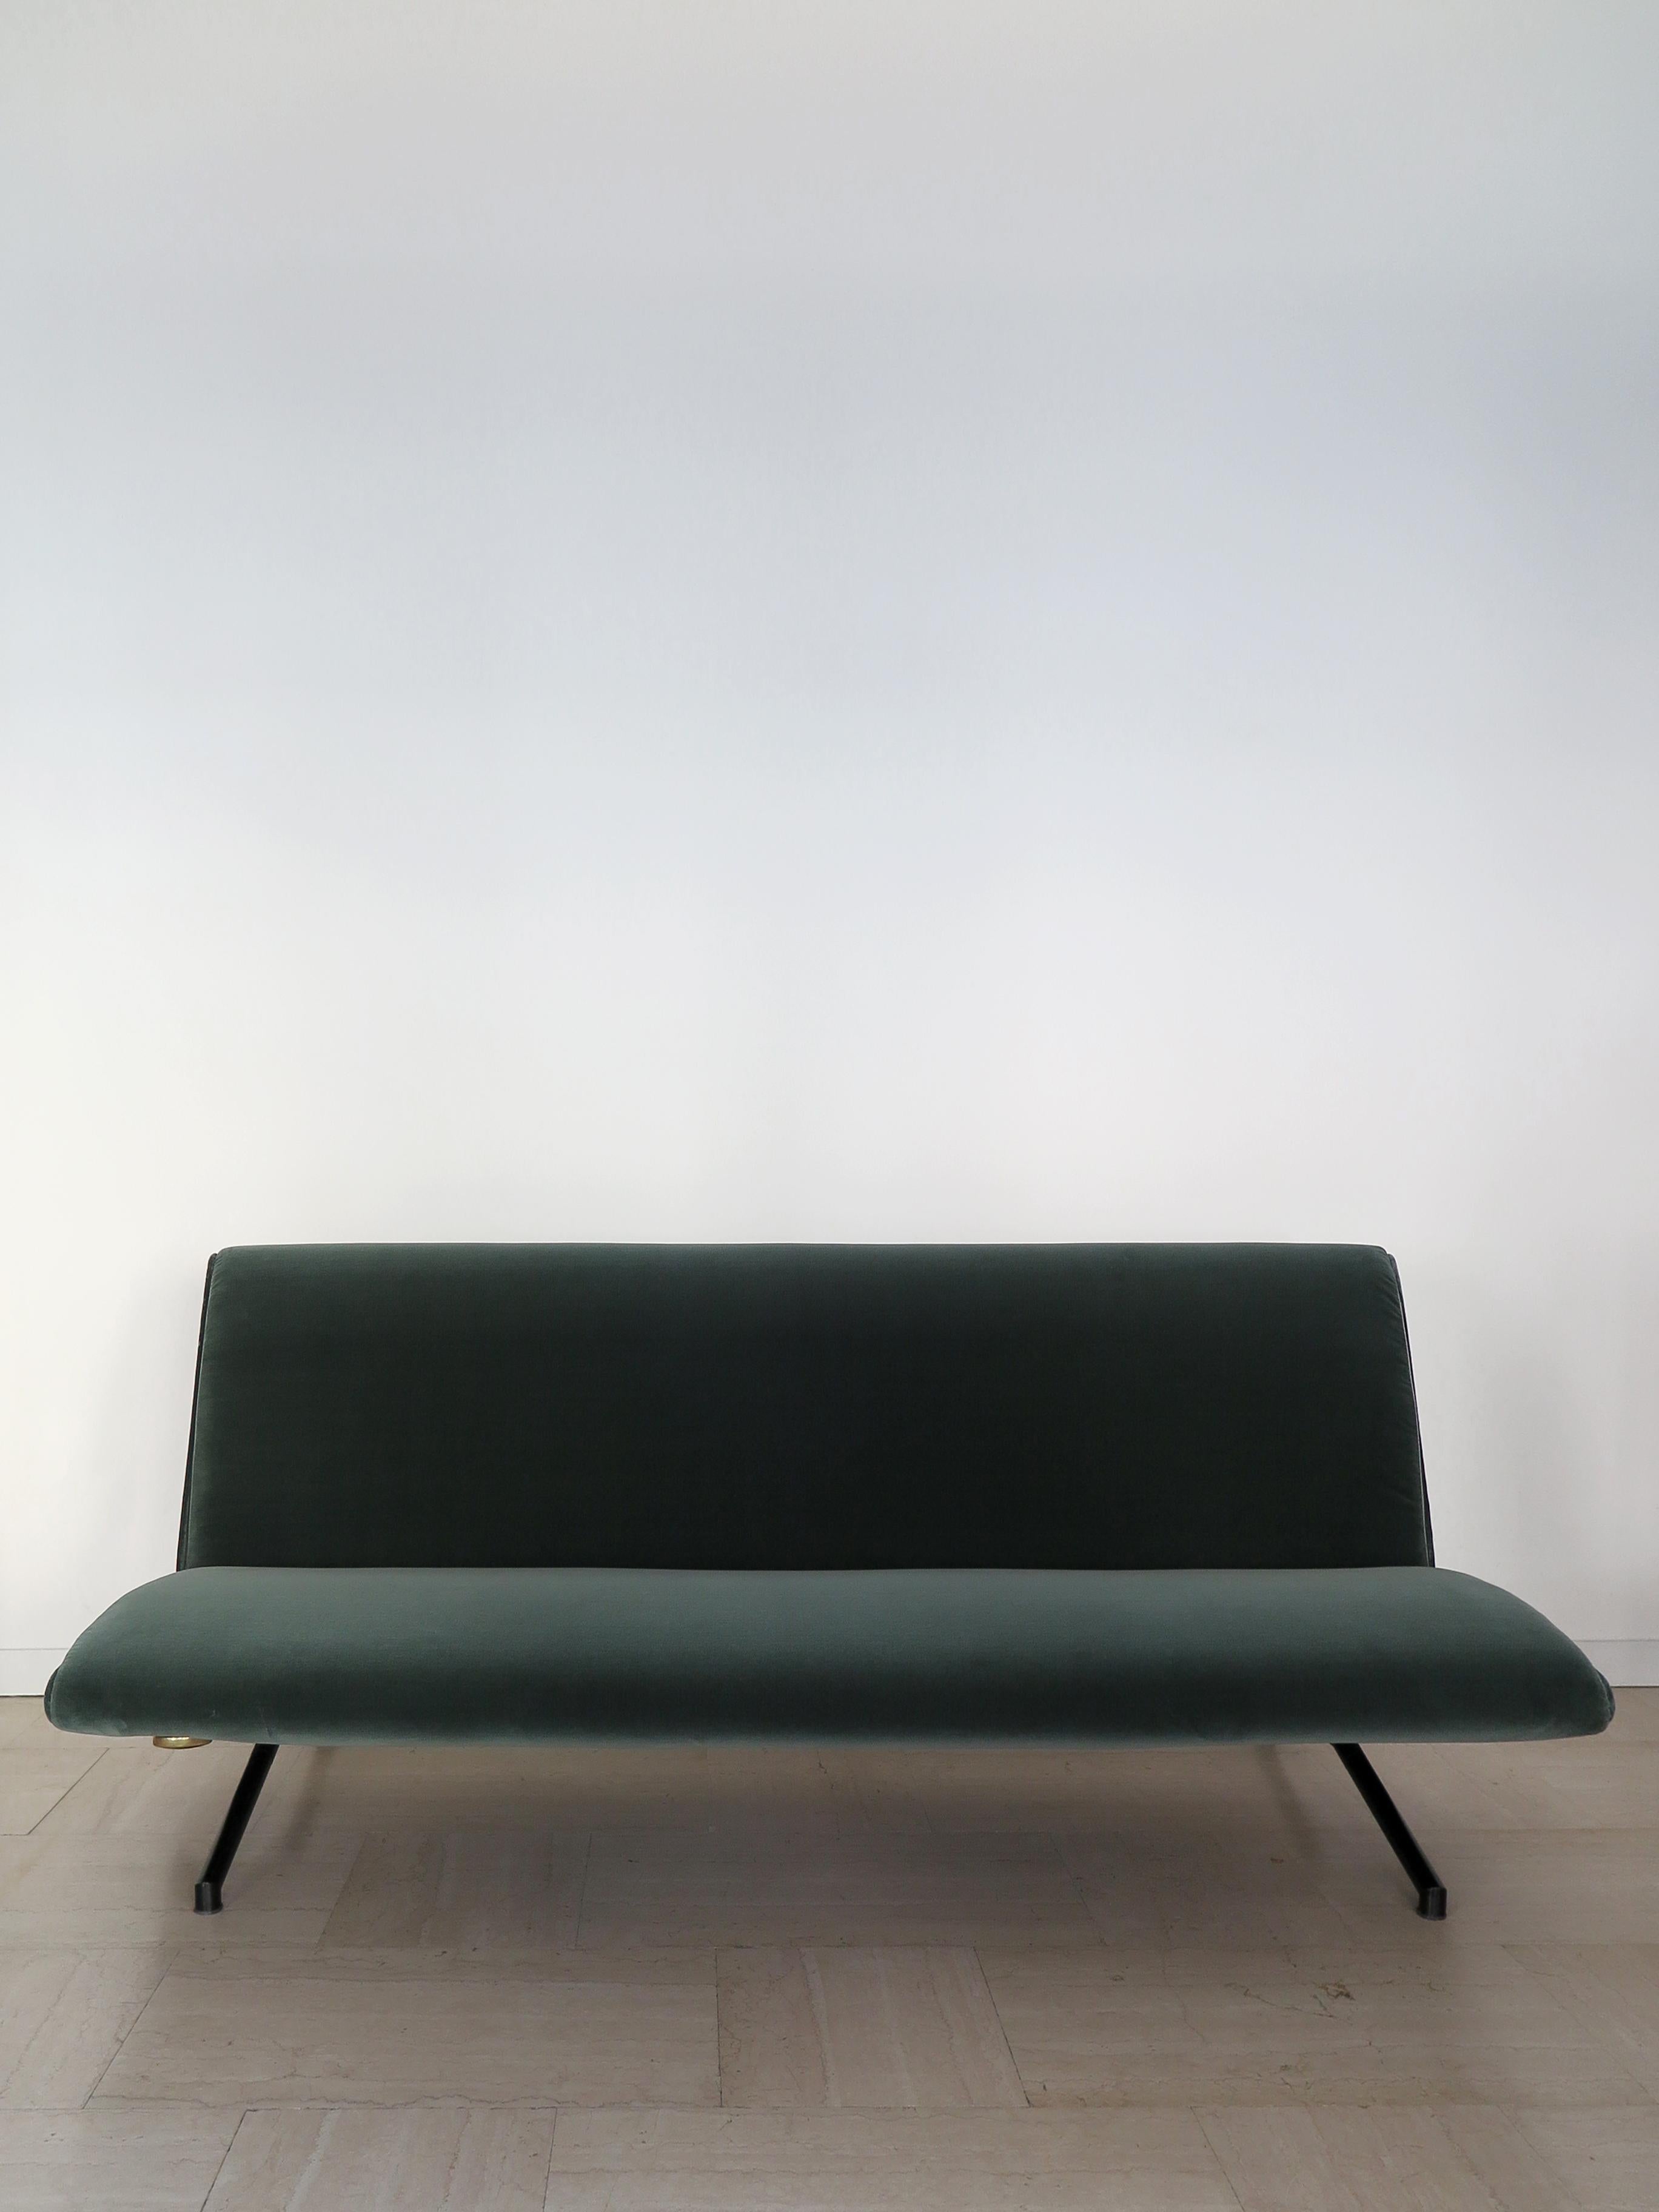 Italian sofa model D70 designed by Osvaldo Borsani for Tecno in 1954 with metal frame, polyurethane foam padding and new blue green velvet upholstery by the prestigious Rubelli Venezia weaving mill.
The D70 has two swivel wings, a metal frame, the